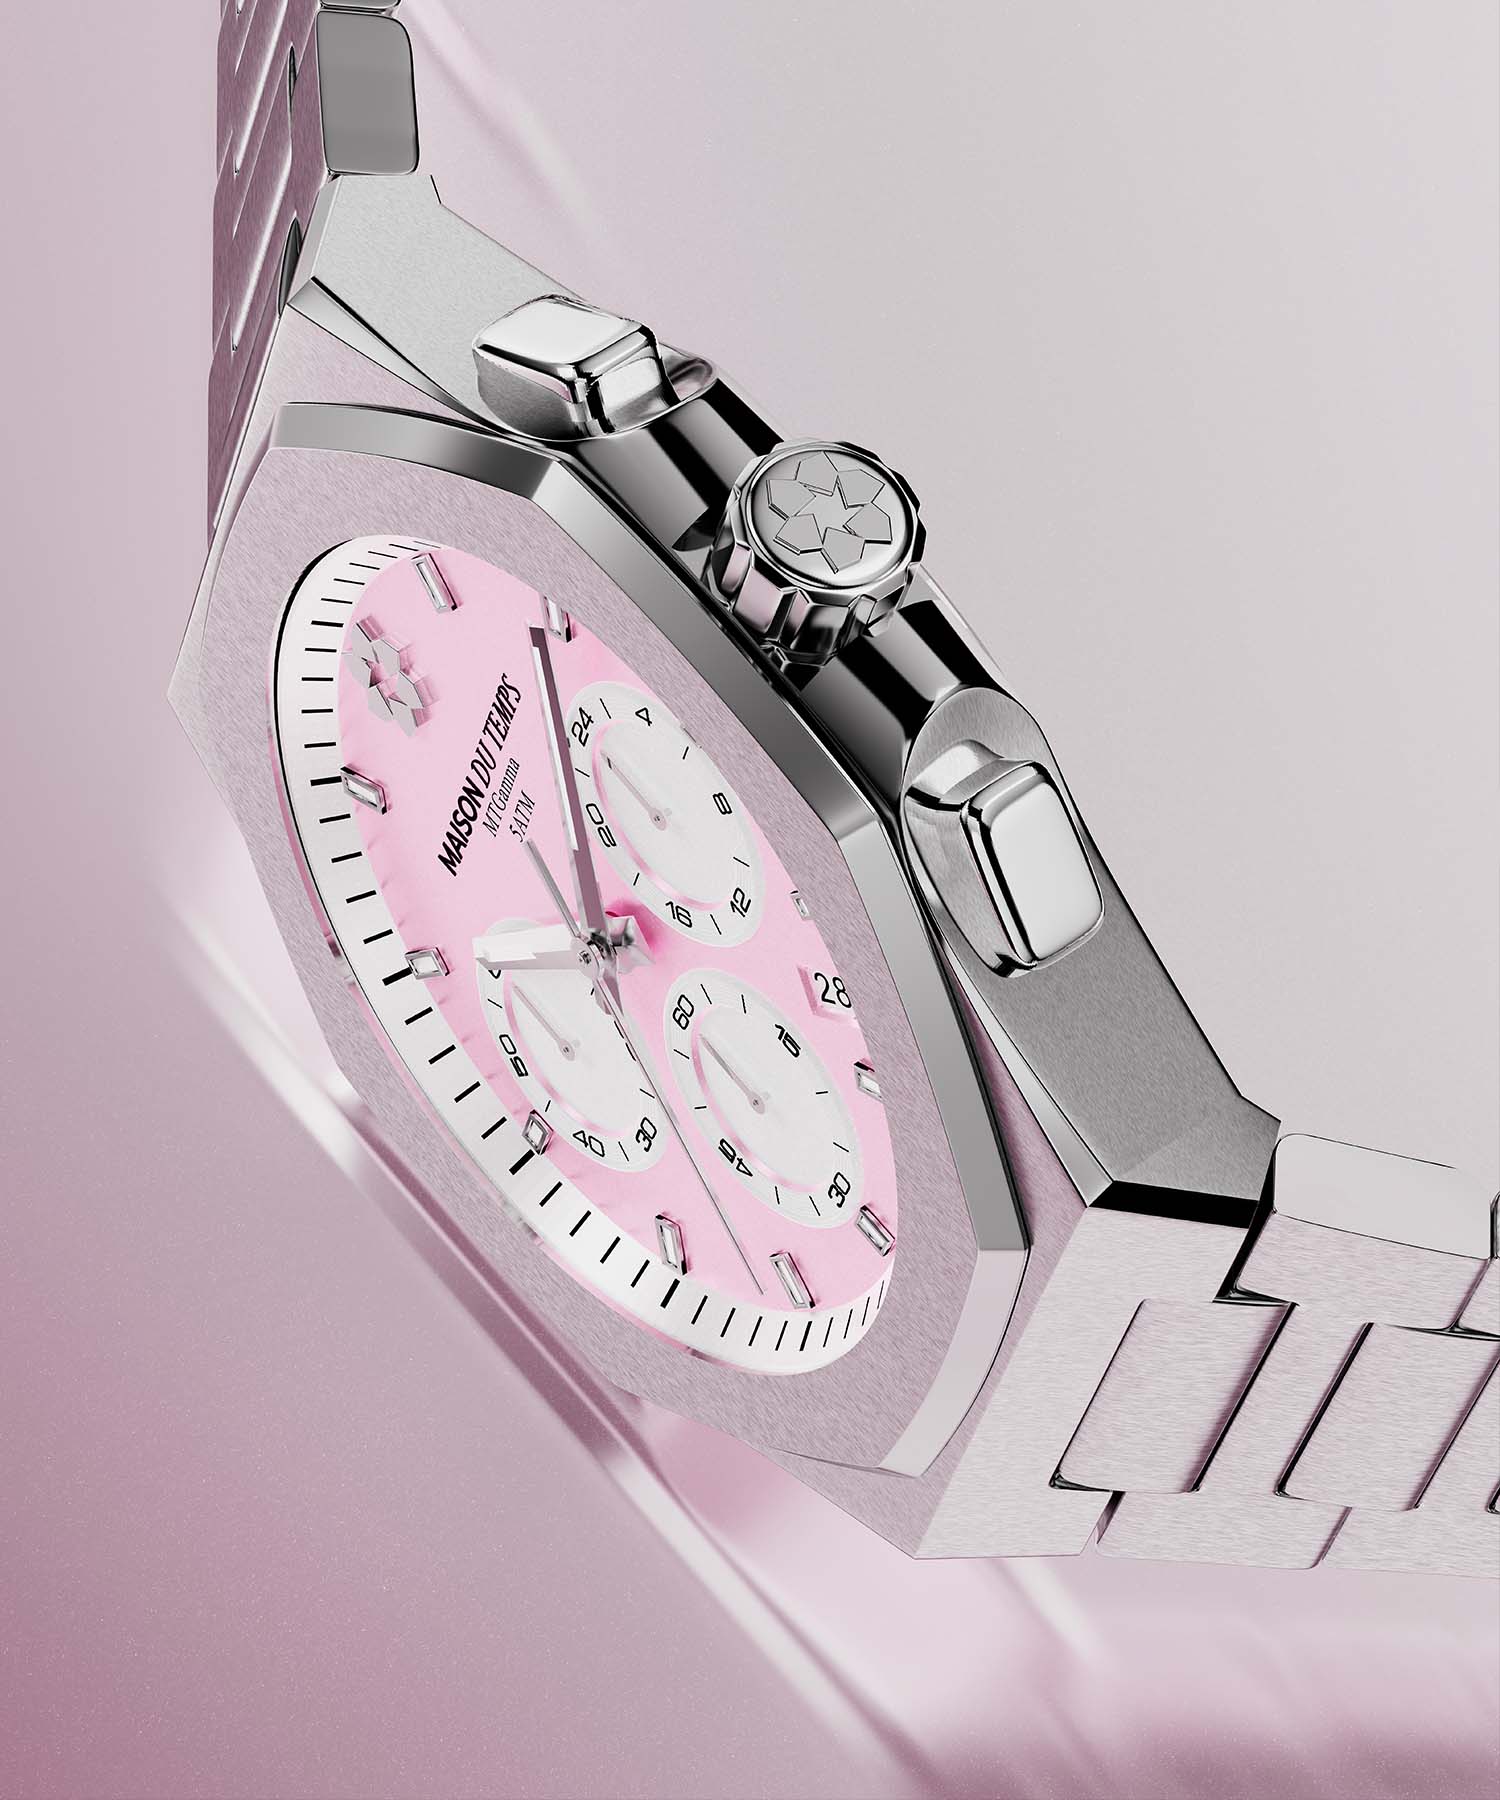 Montre chronographe cadran rose homme